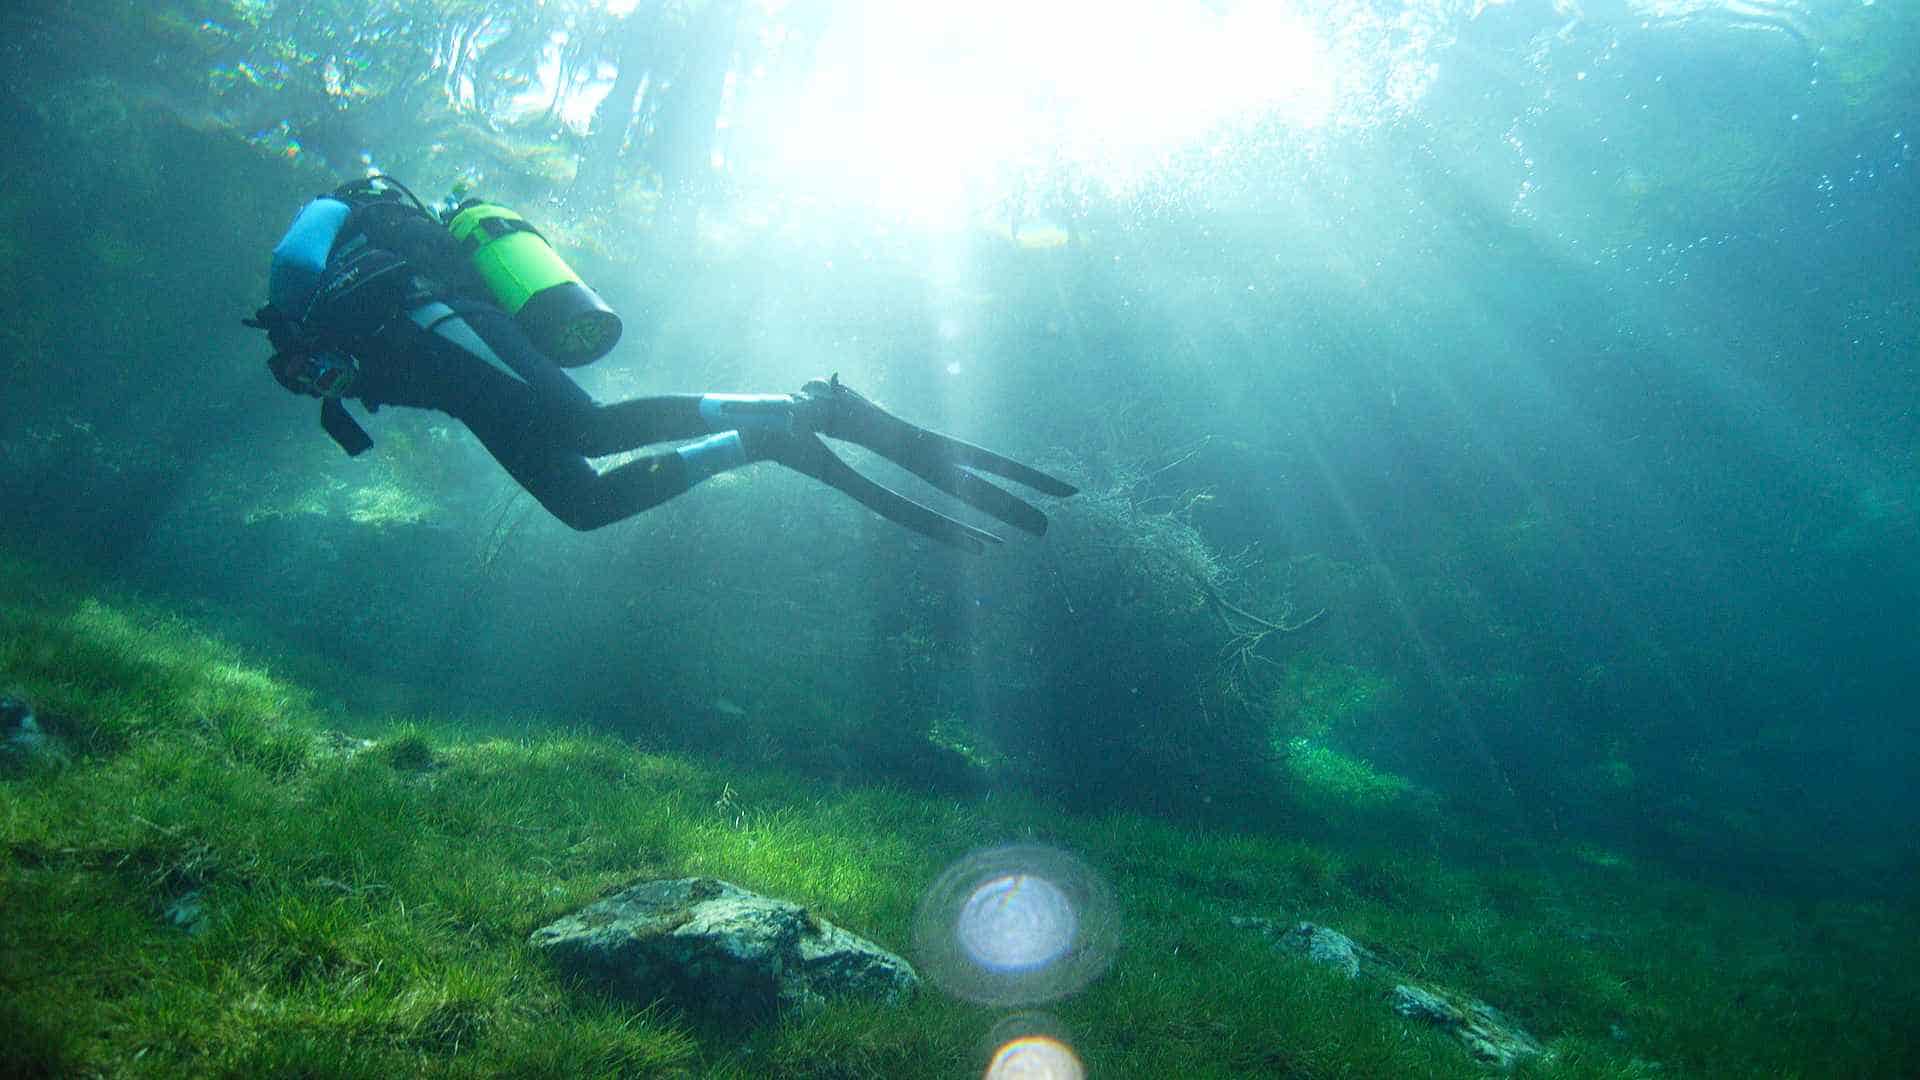 Scuba diver in the Green Lake in Austria